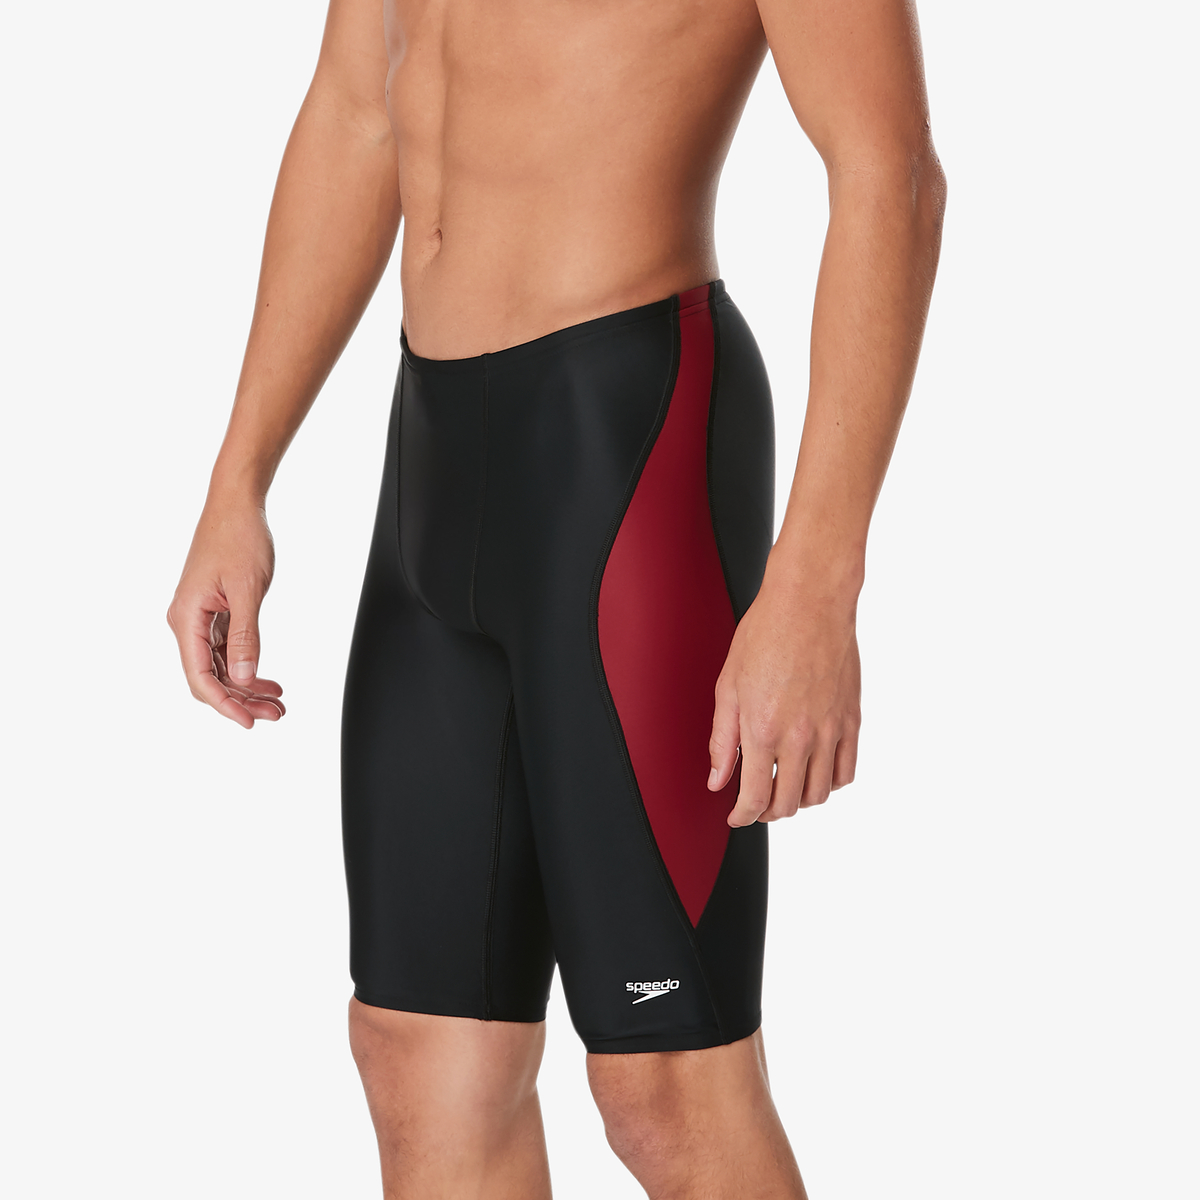 Speedo Men's Swimsuit Jammer Endurance Splice Team Colors 